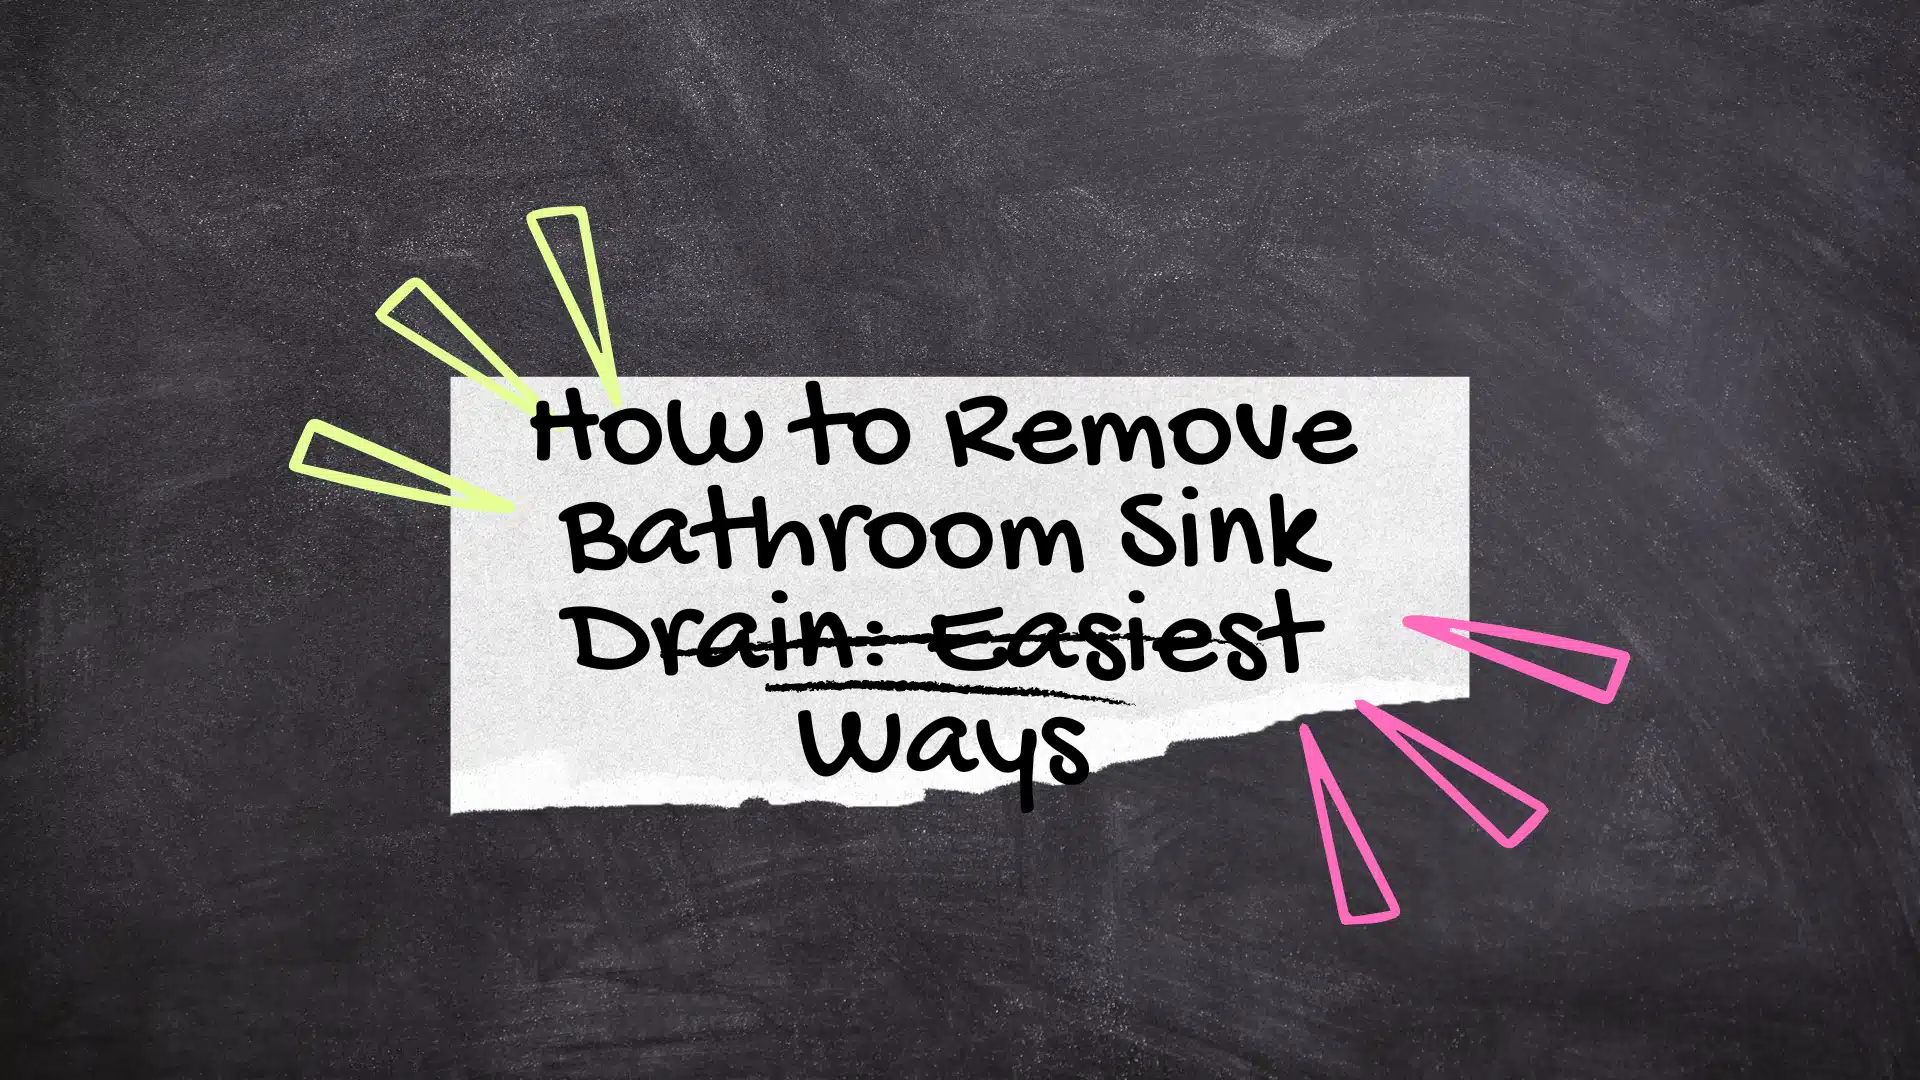 How to Remove Bathroom Sink Drain: Easiest Ways